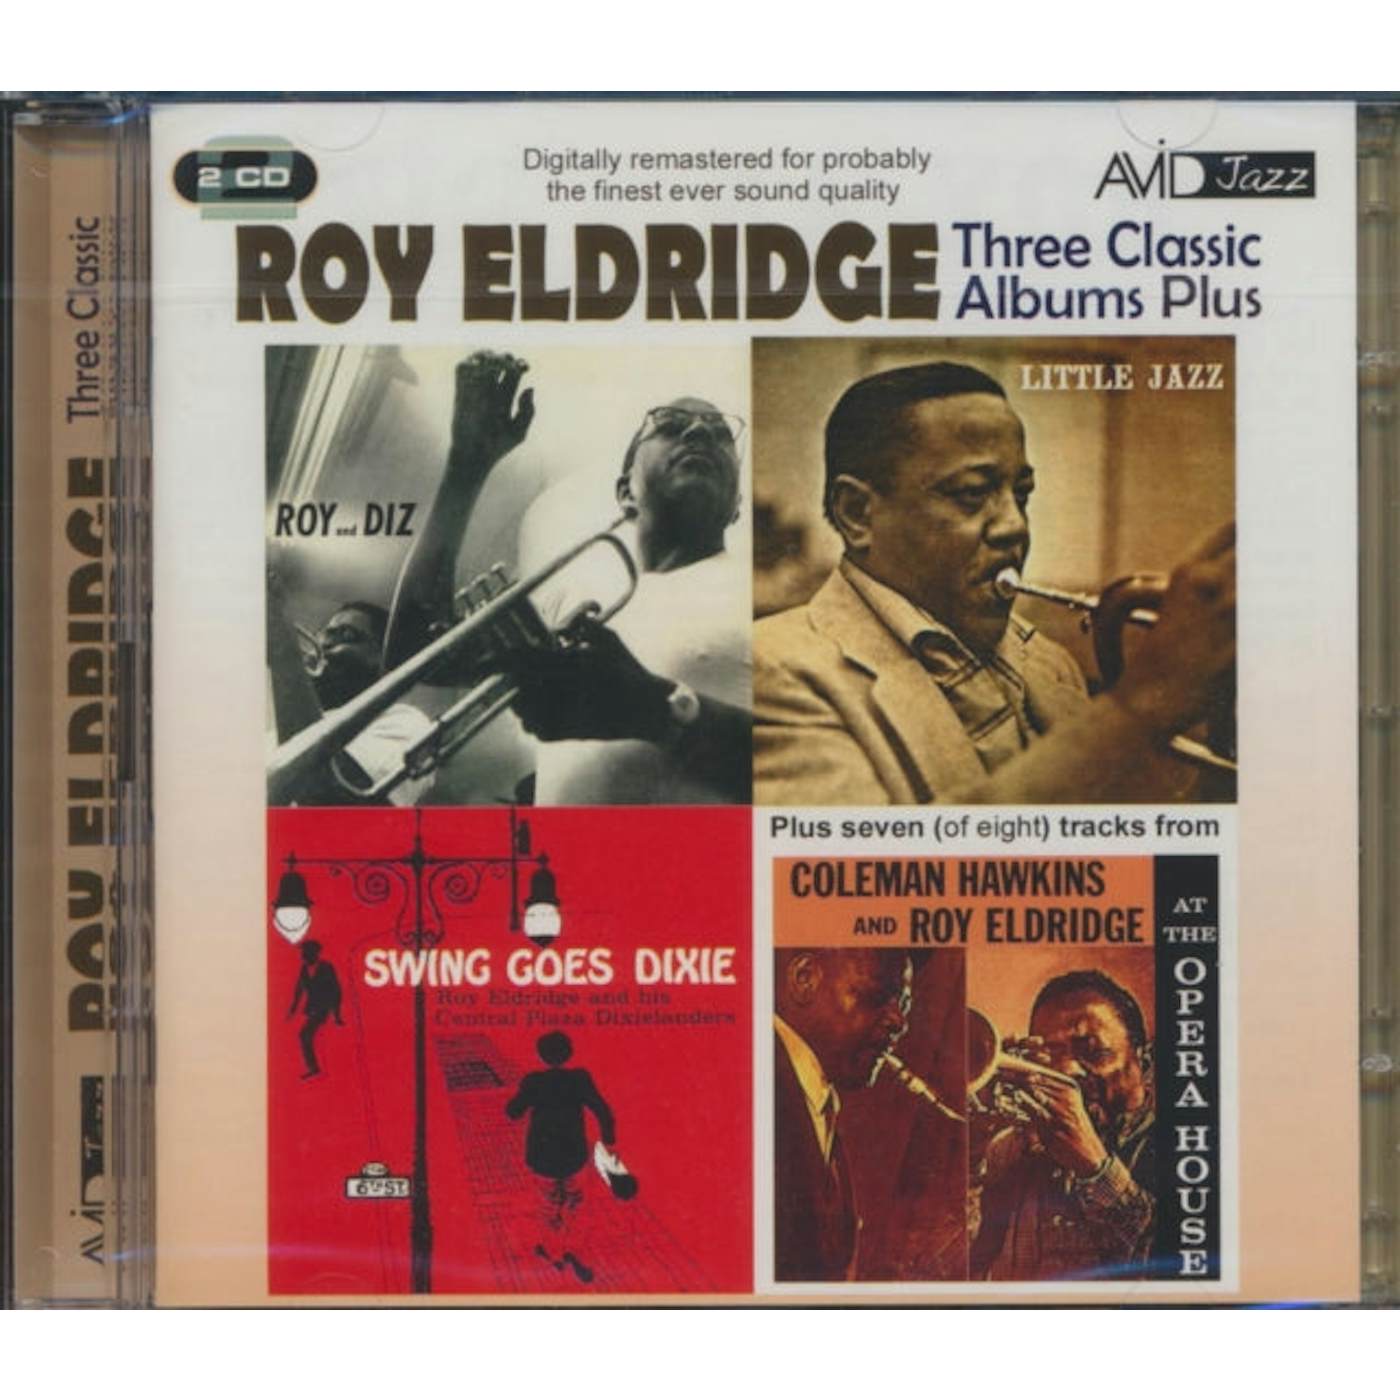 Roy Eldridge CD - Three Classic Albums Plus (Roy And Diz / Little Jazz / Swing Goes Dixie)